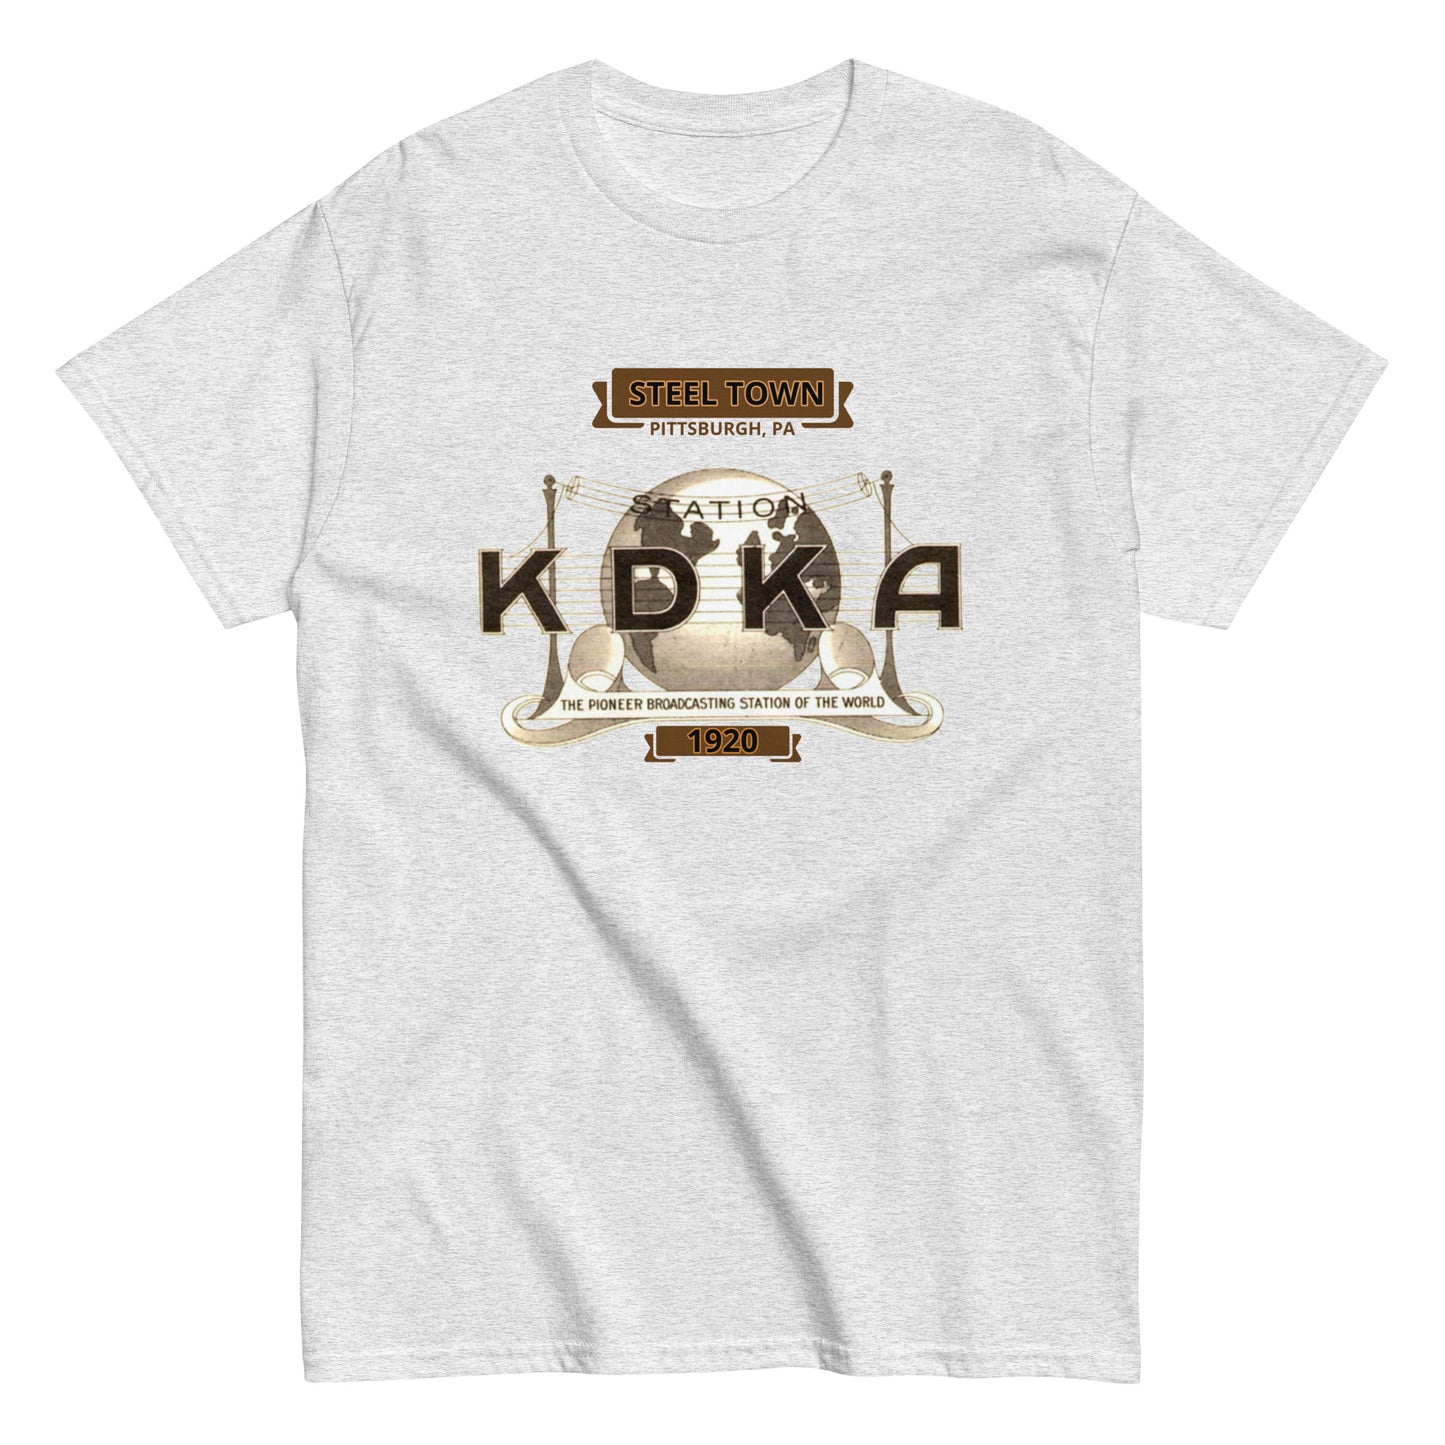 KDKA 1020 BROADCAST COMPANY Men's classic tee